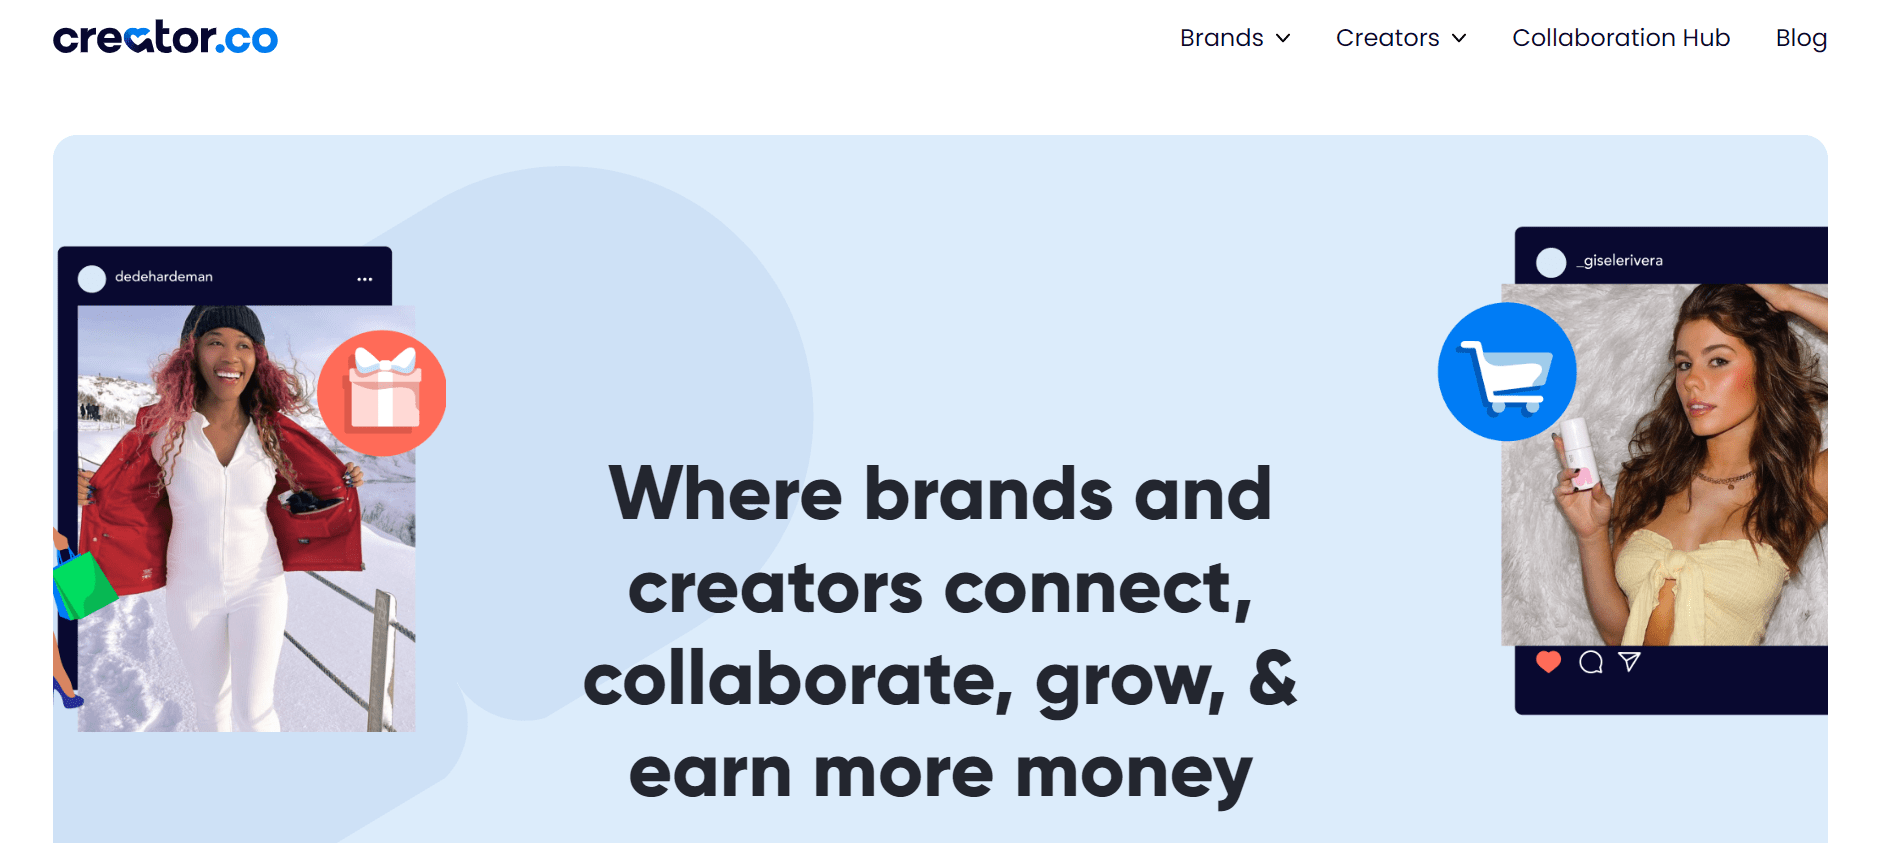 creator co connecting brands creators